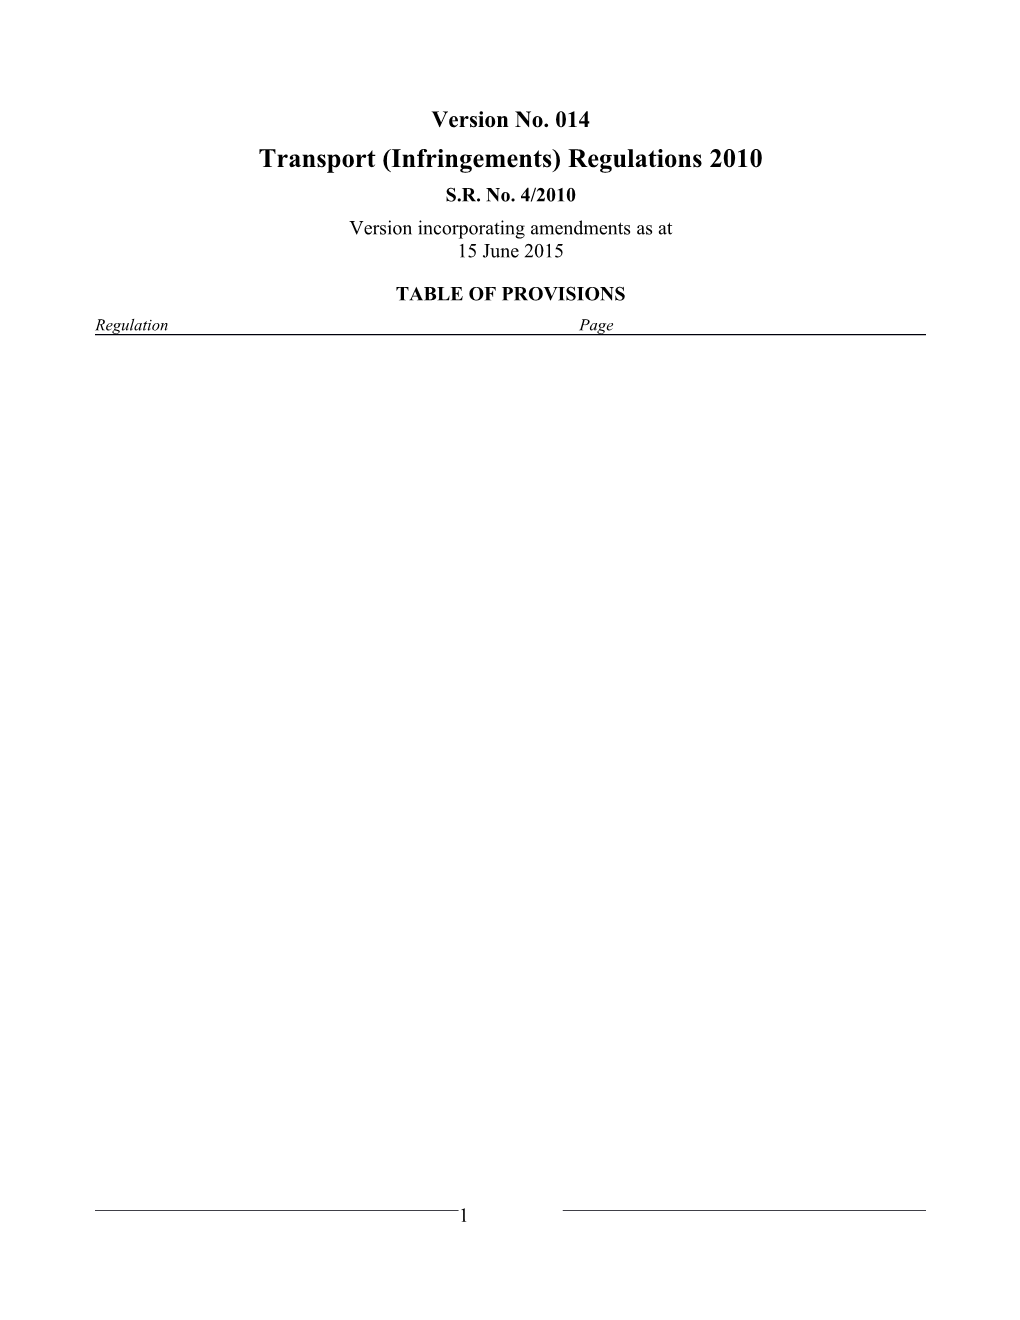 Transport (Infringements) Regulations 2010